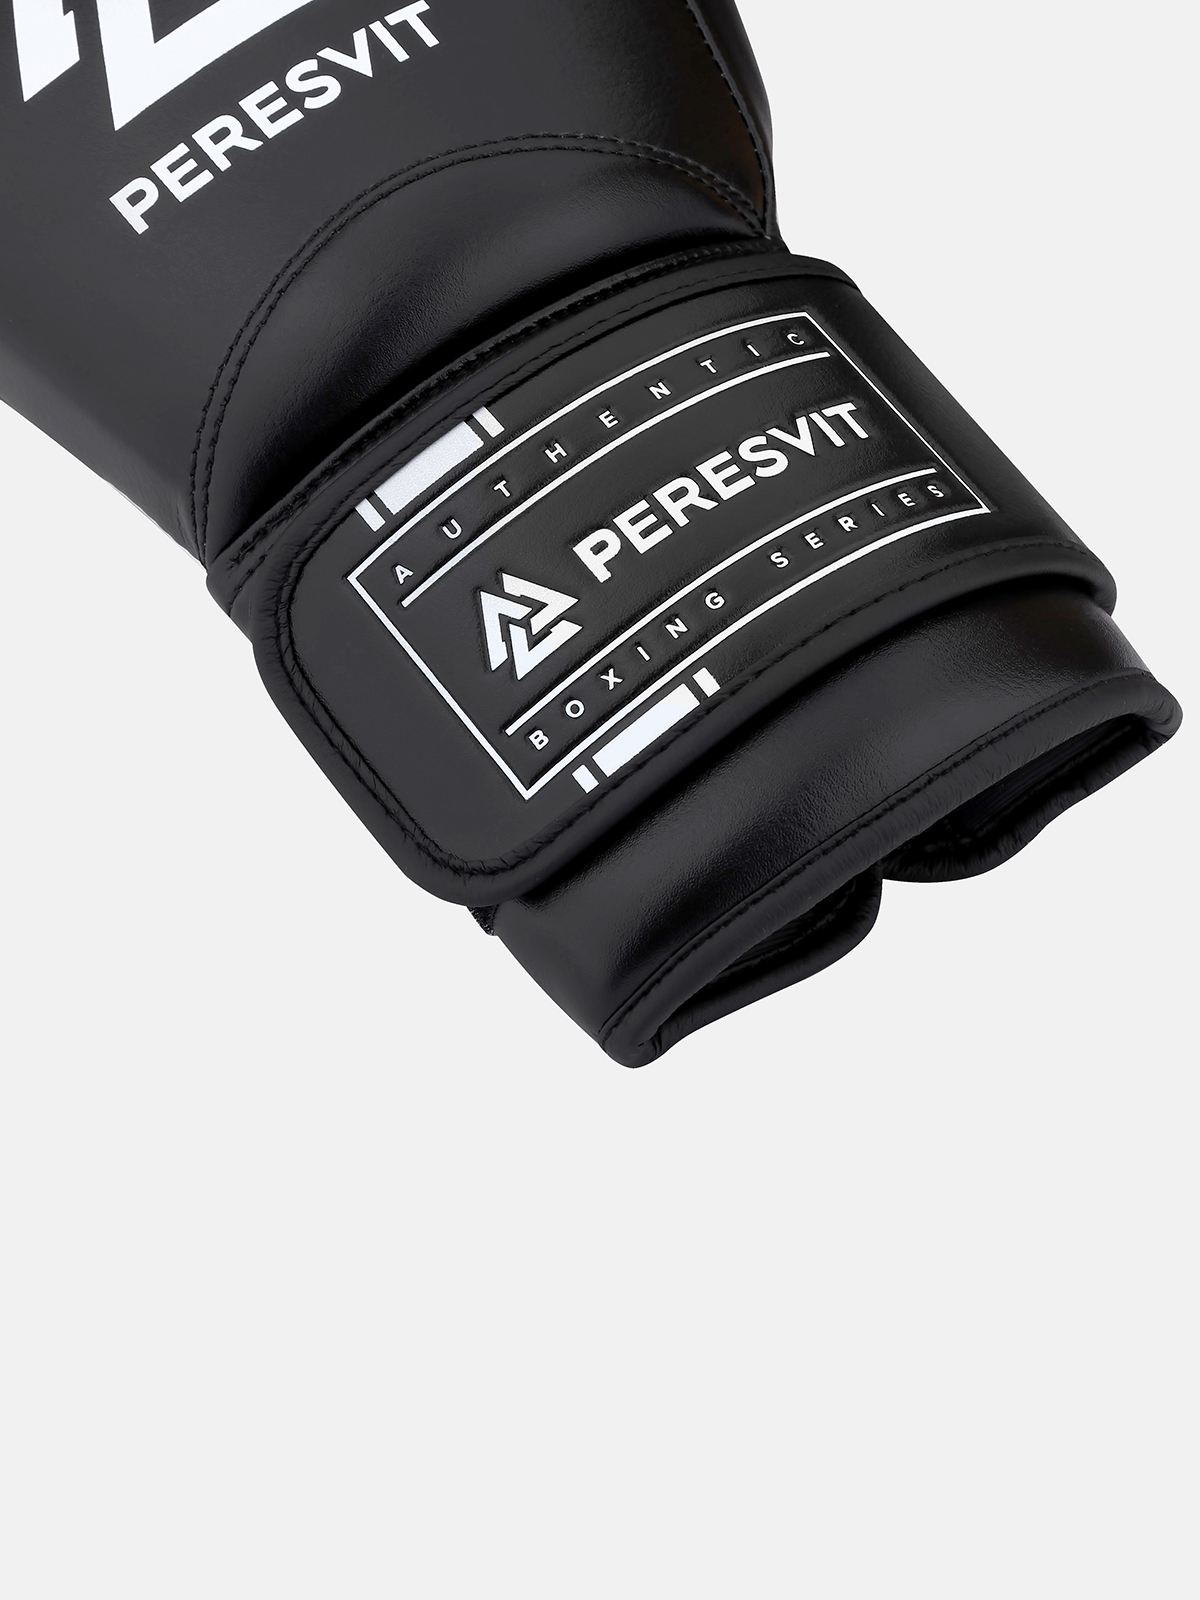 Peresvit Precision Boxing Gloves, Photo No. 6